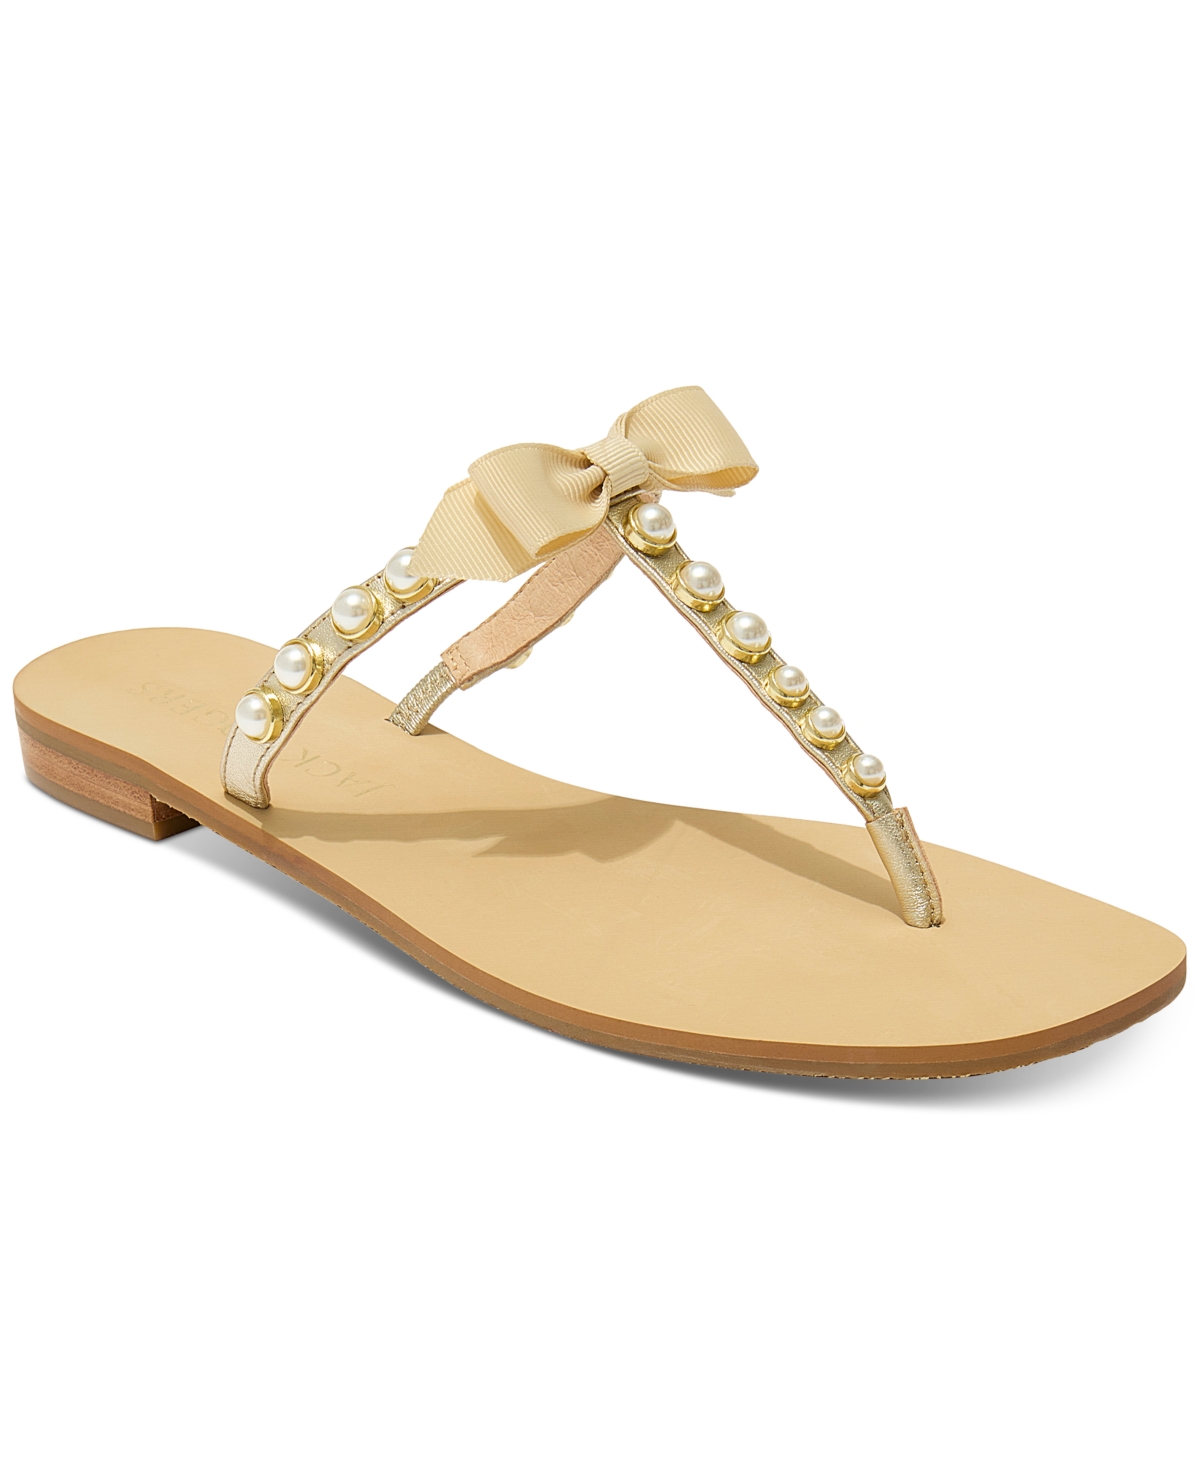 Jack Rogers Women's Sandpiper Bow Embellished Flat Sandals